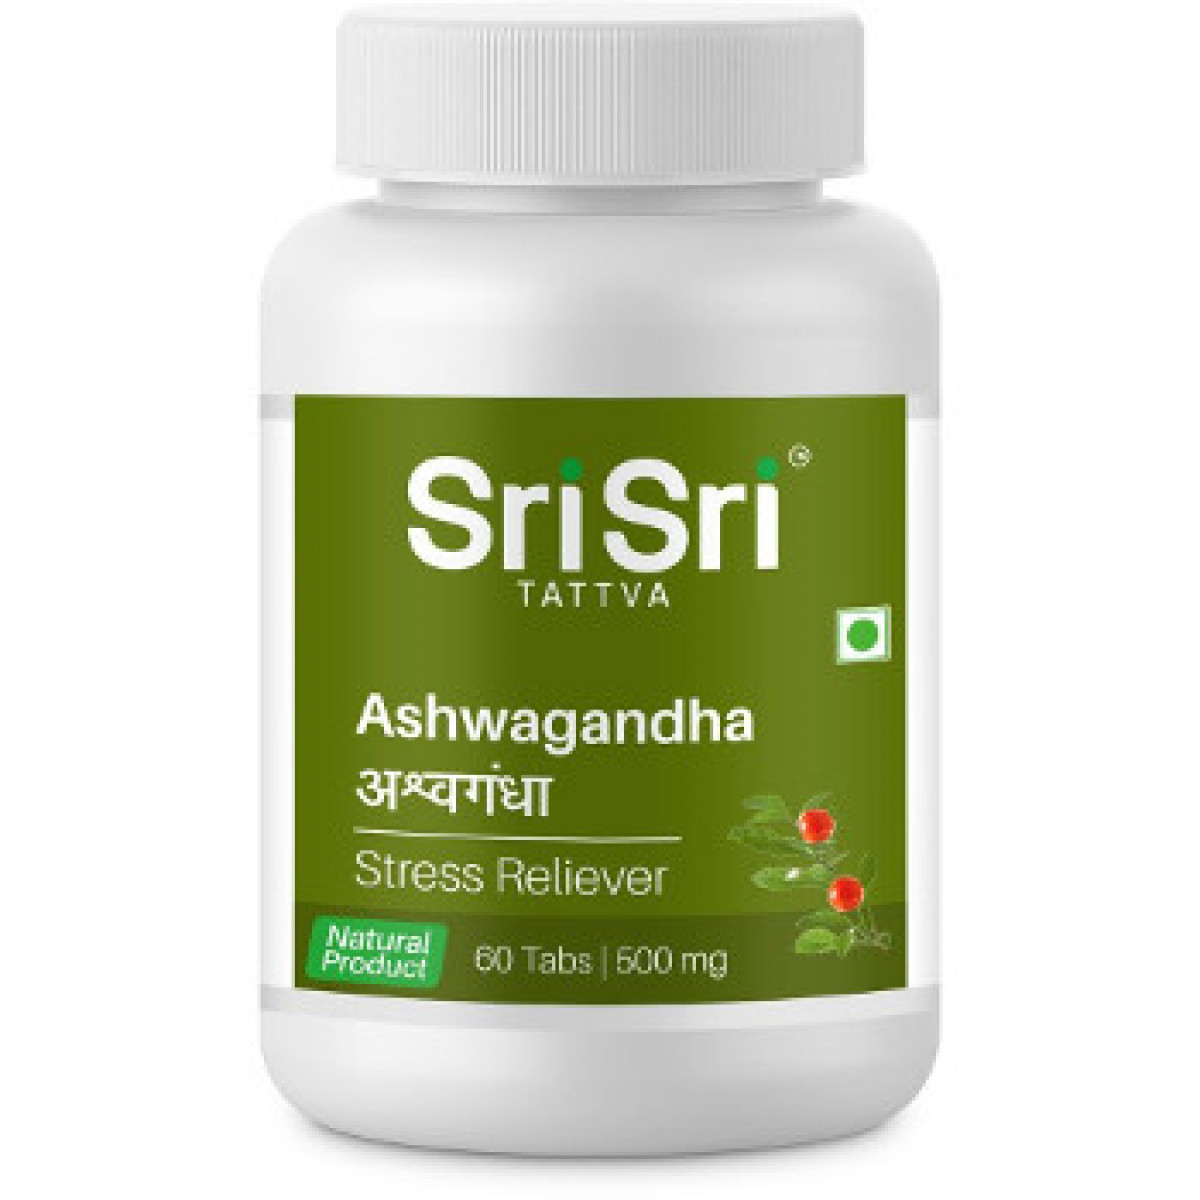 Ашваганда 60 таблеток, Sri Sri Tattva, наделяет организм физической и умственной силой,